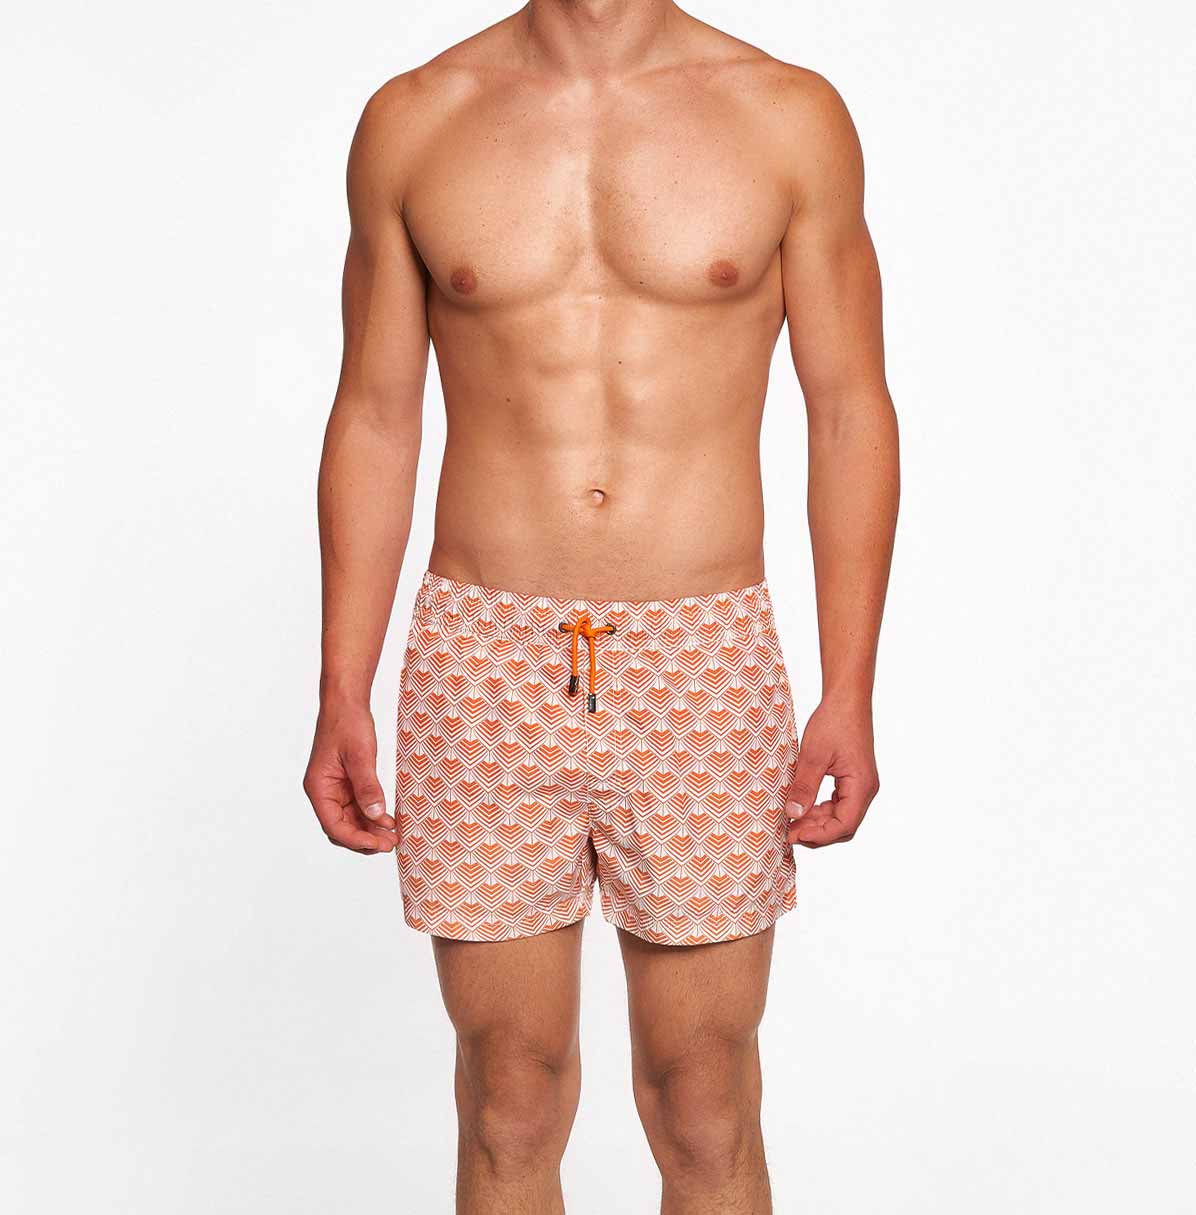 Model wearing orange/off white swim trunks